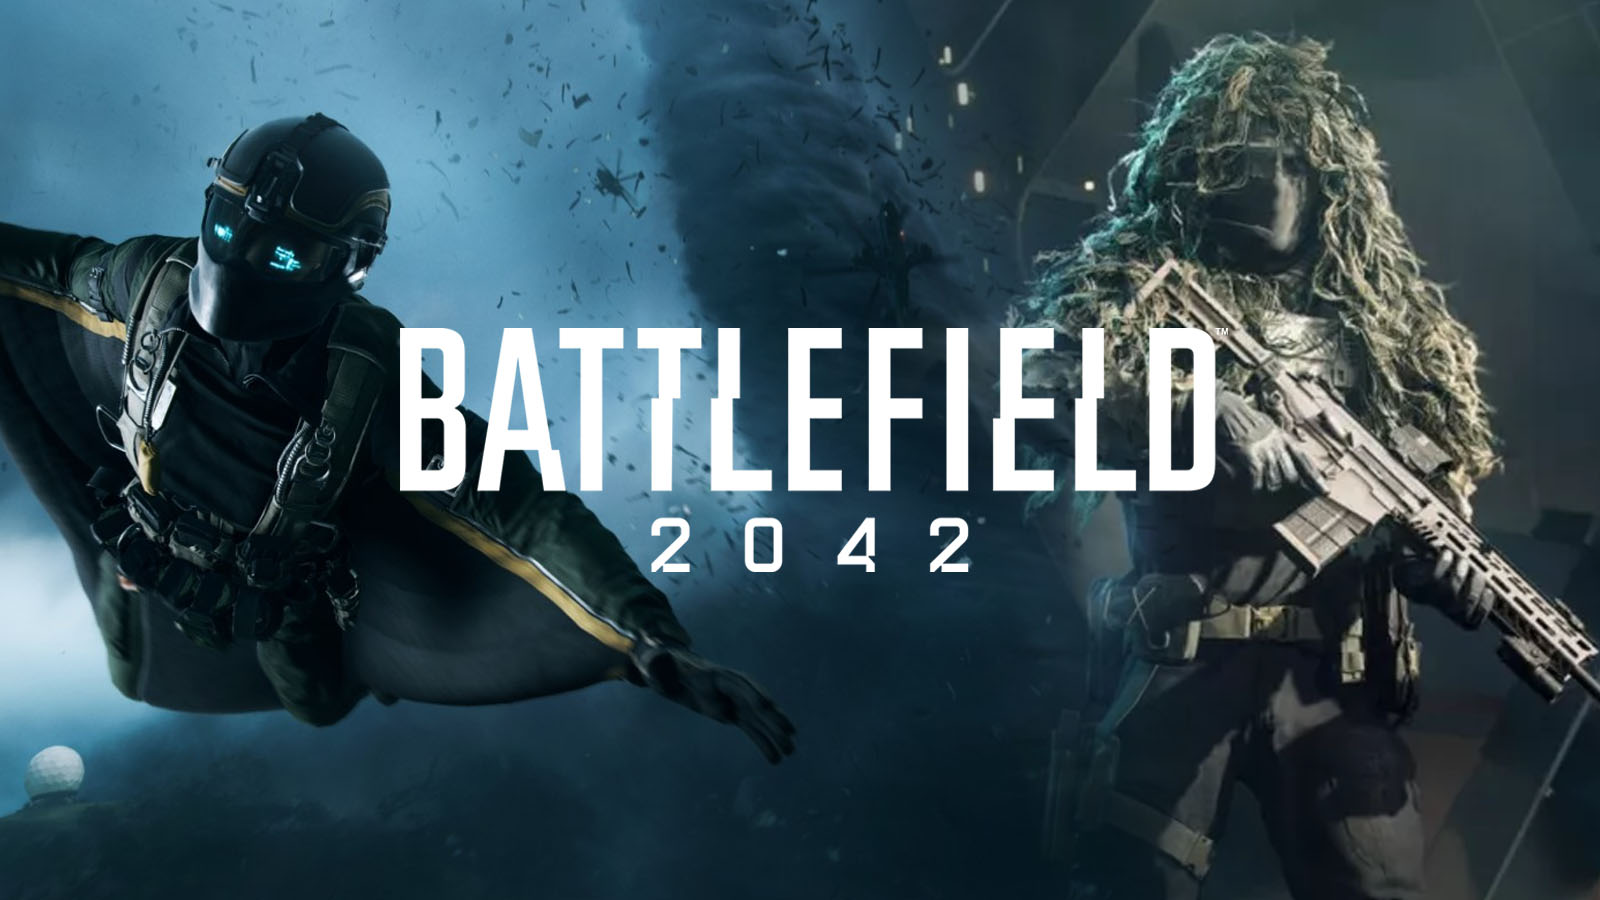 Battlefield 2042 Won't Have Campaign Or Battle Royale Modes